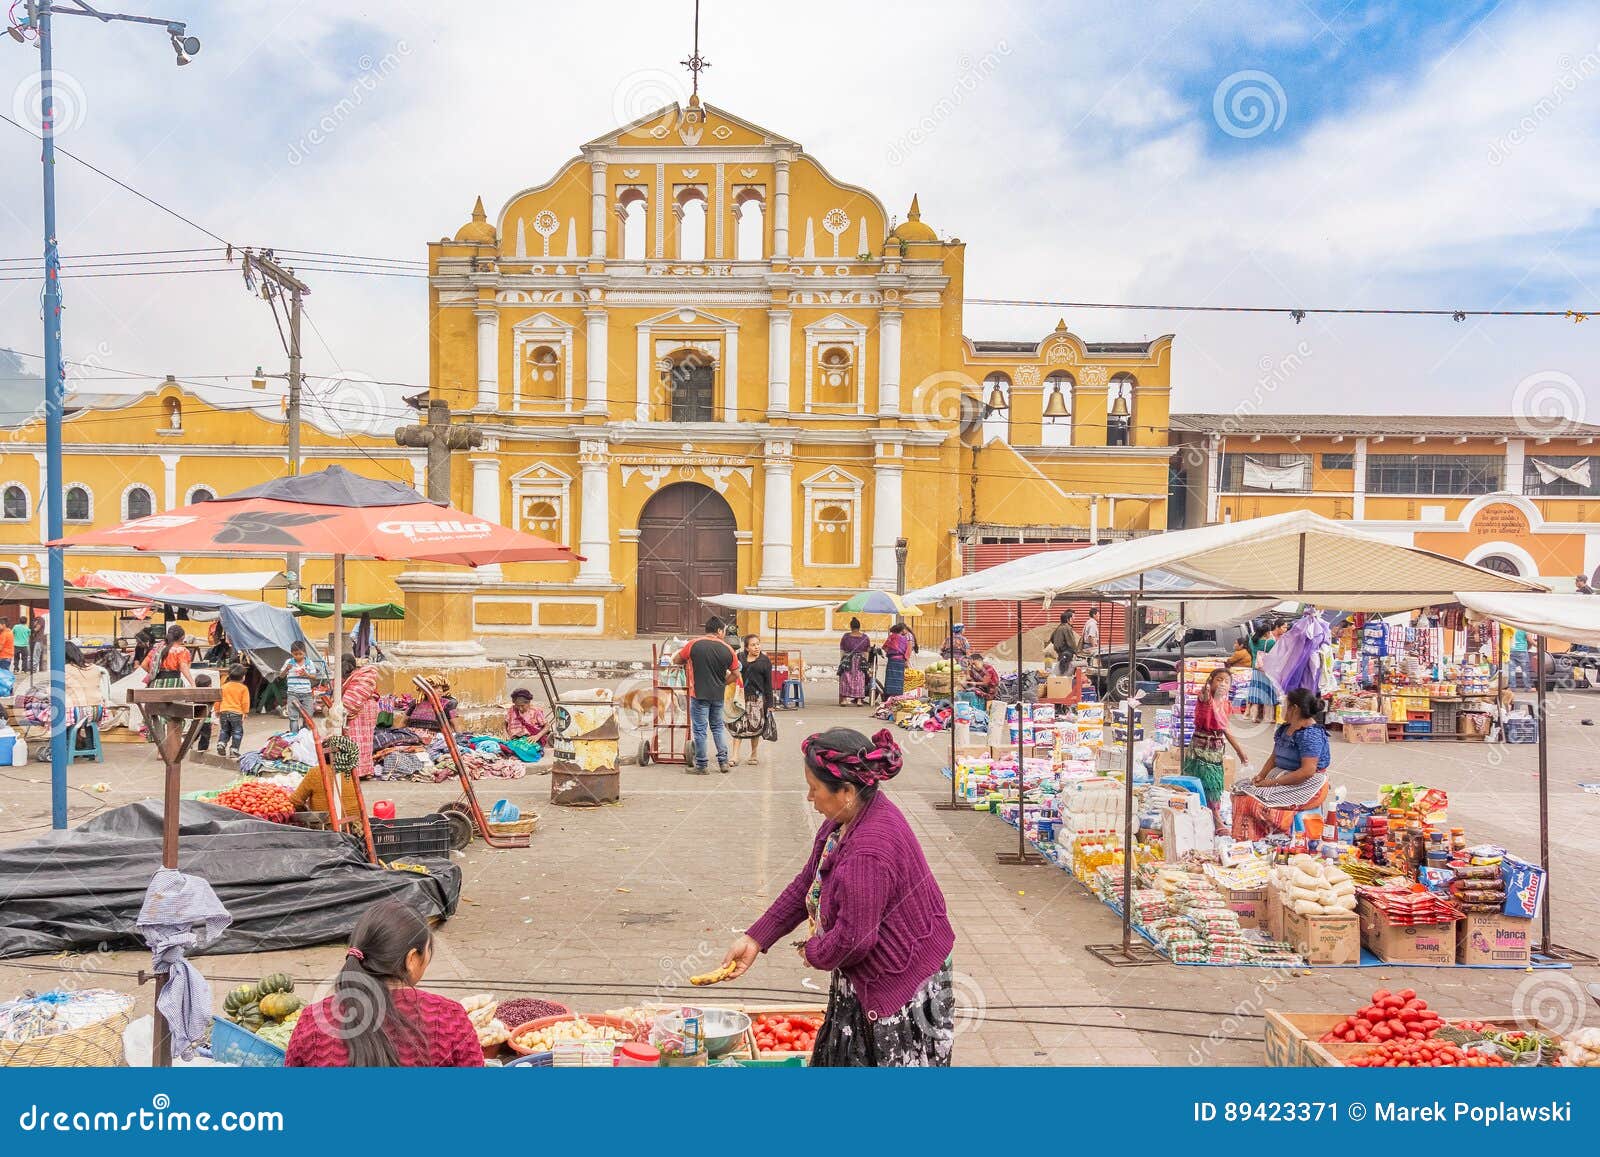 Facade of the Catholic Church of Santa Maria De Jesus in Guatemala.  Editorial Photo - Image of market, countryside: 89423371